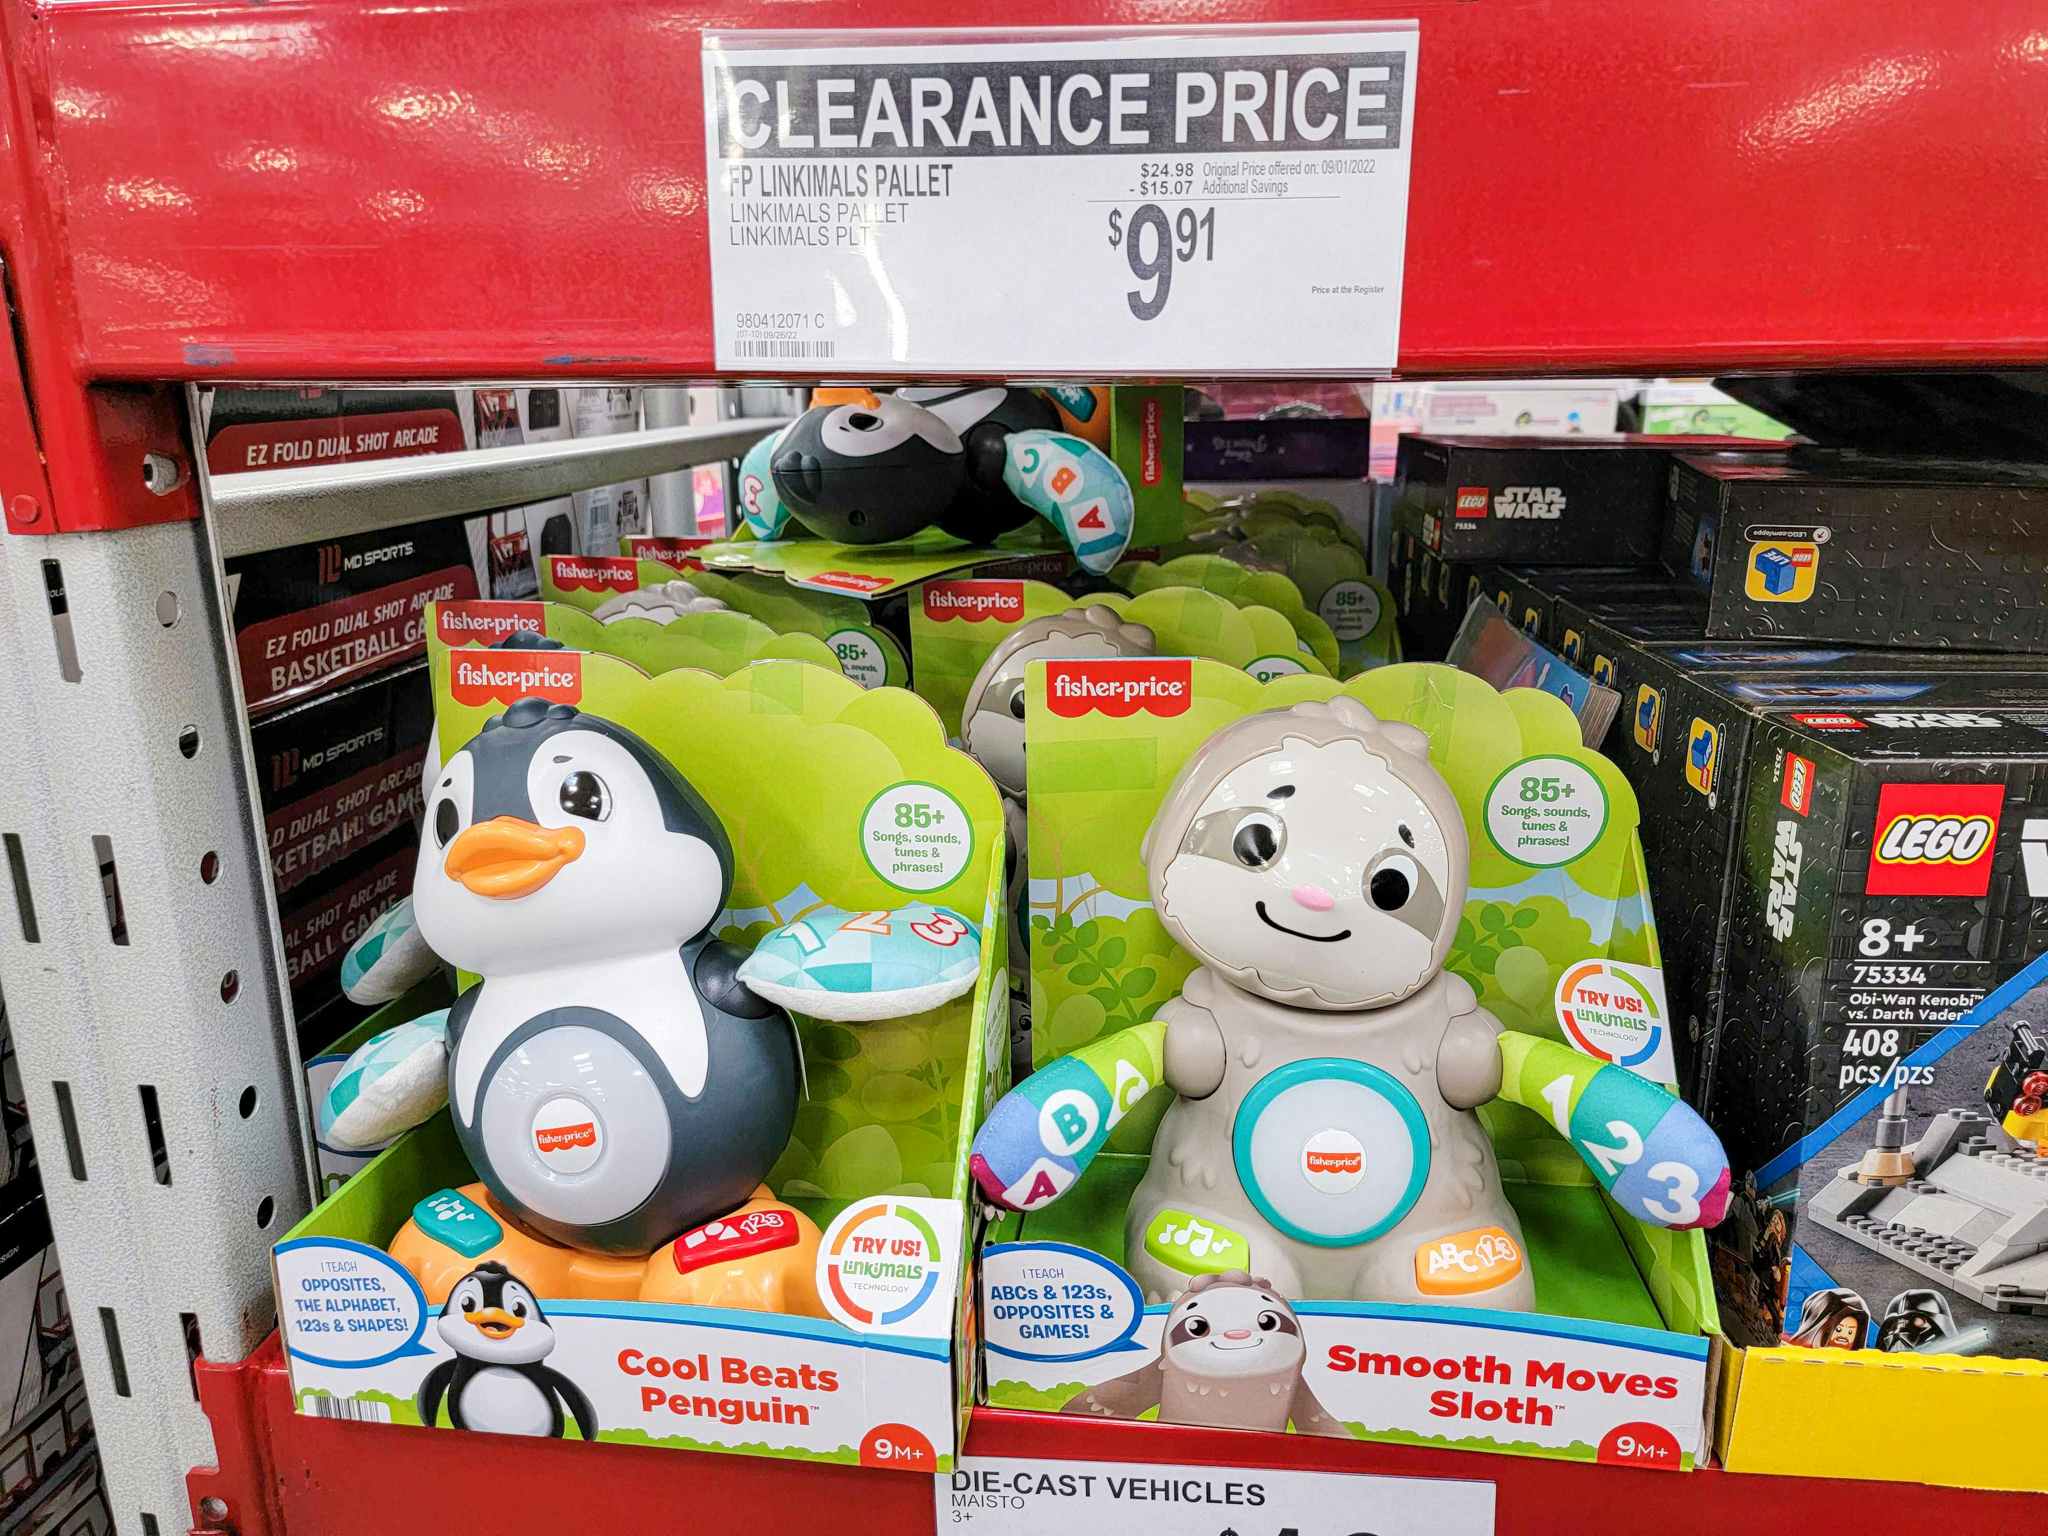 penguin and sloth linkimals toys on a shelf